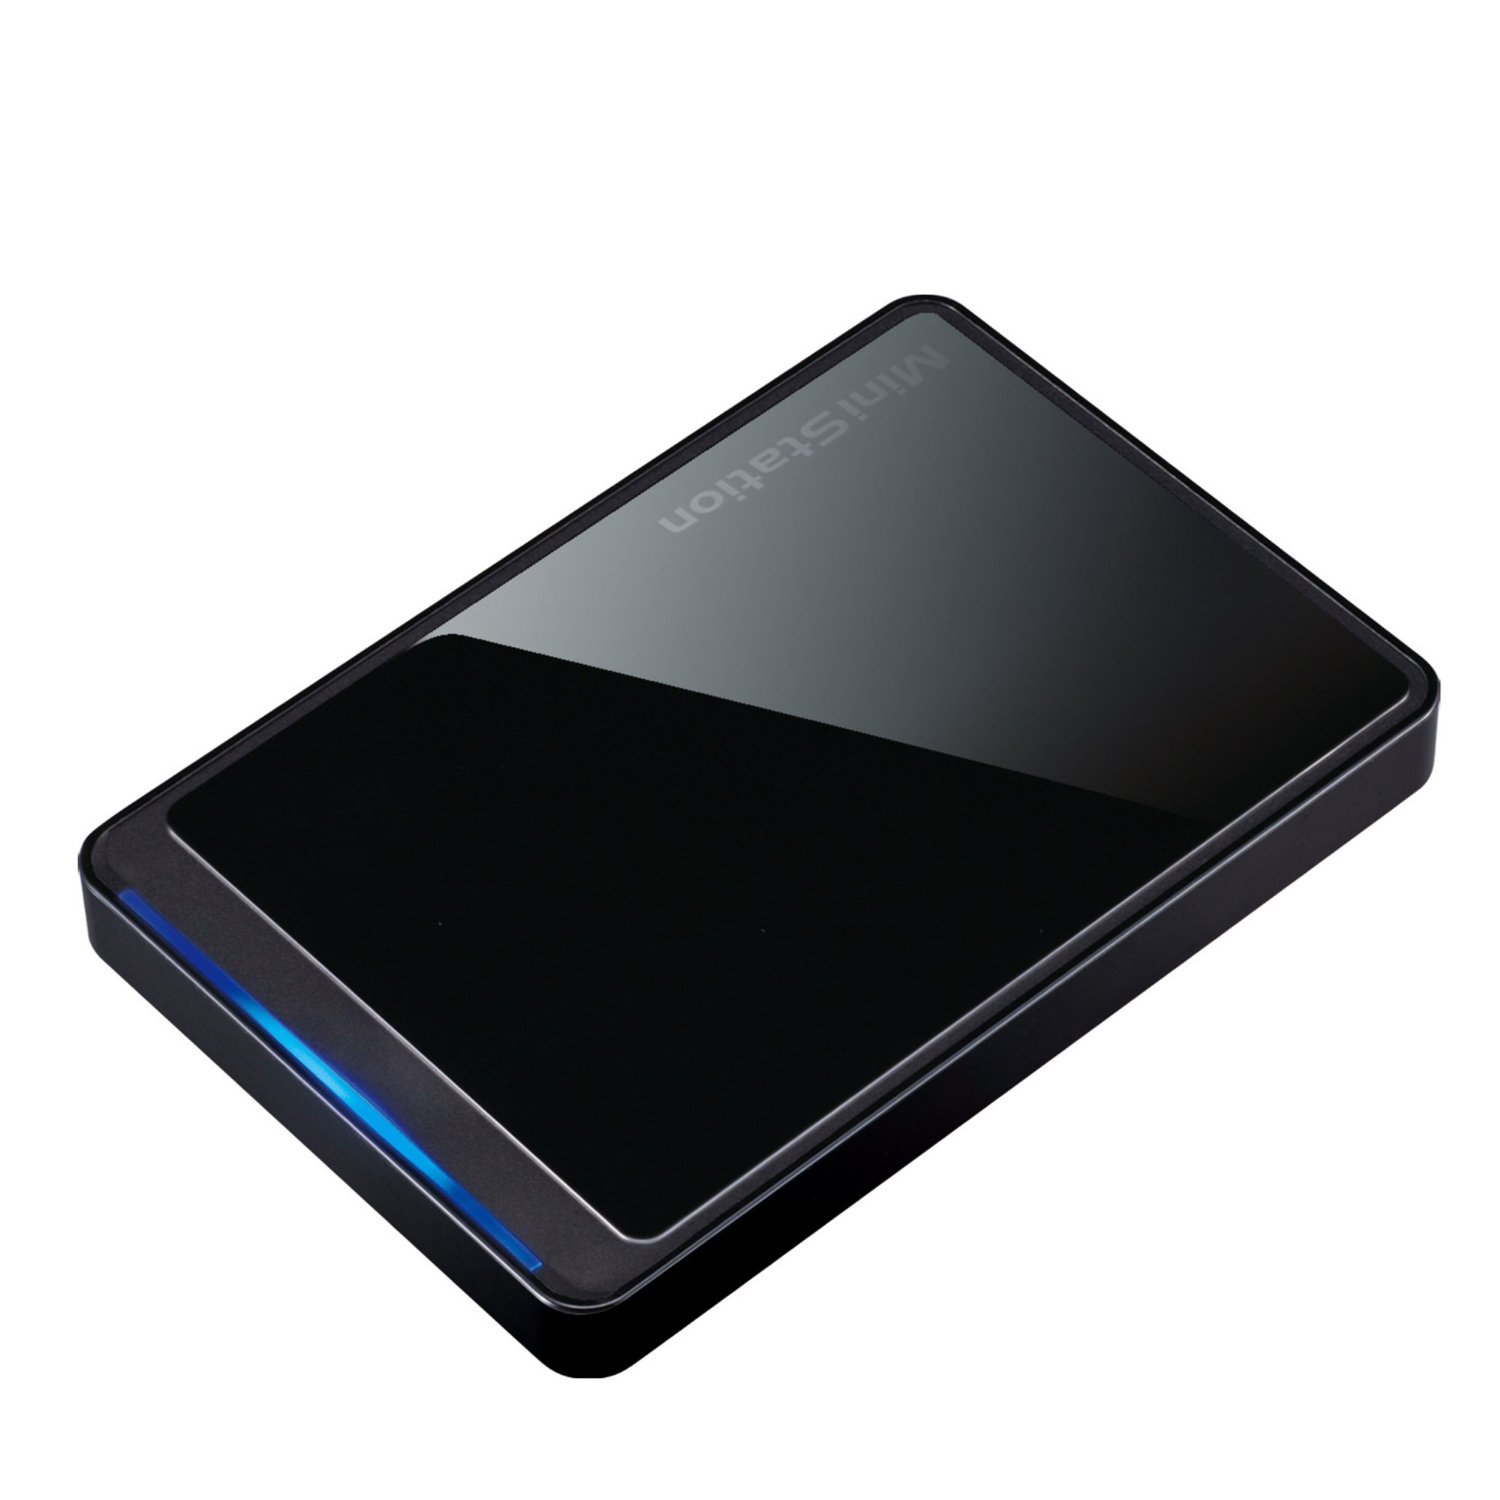 http://thetechjournal.com/wp-content/uploads/images/1108/1312799774-buffalo-technology-ministation-stealth-500-gb-usb-20-portable-external-hard-drive-1.jpg